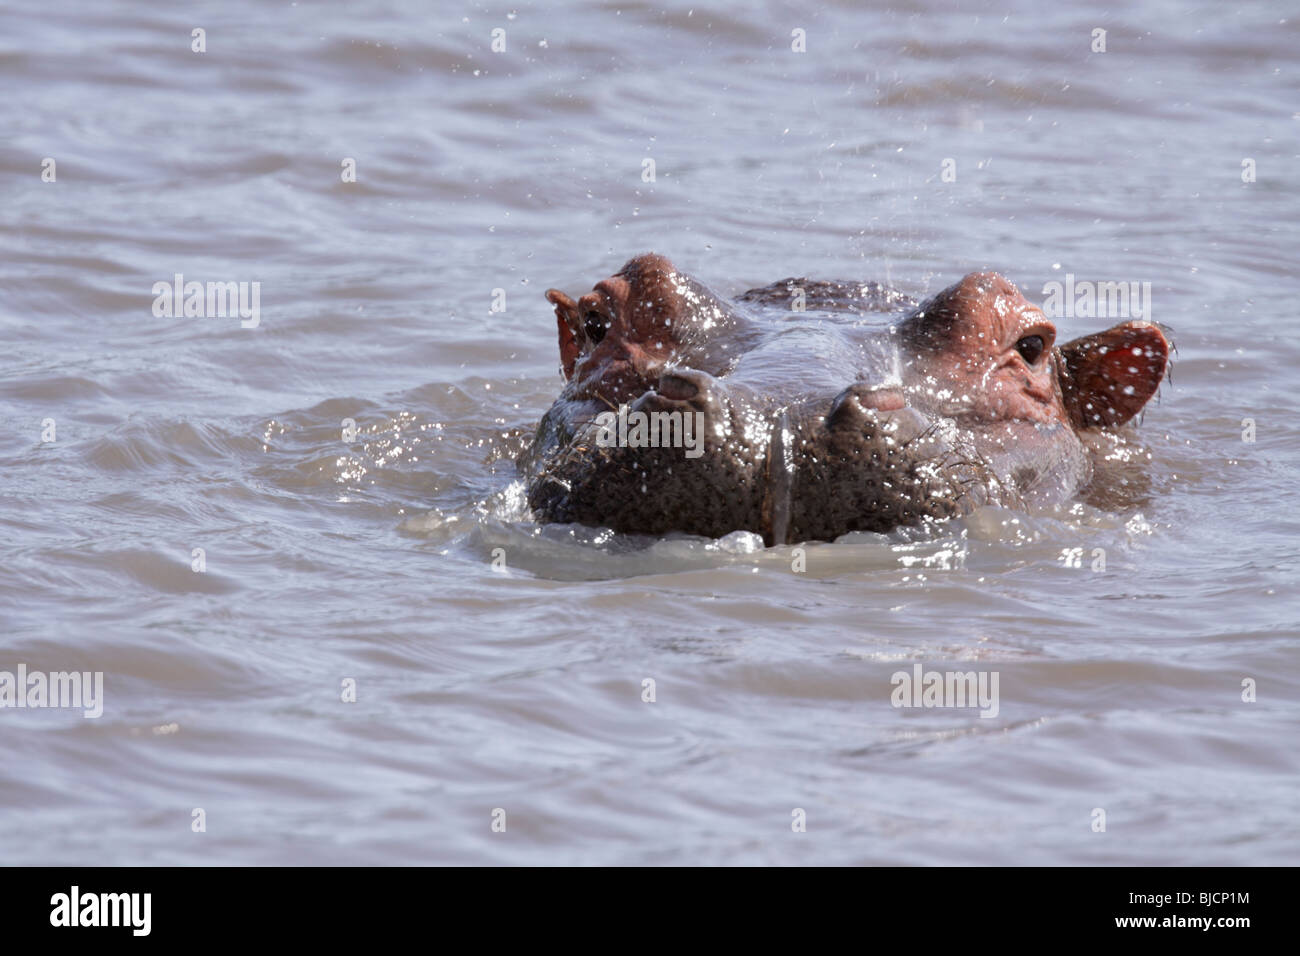 Hippo surfacing in Ngorongoro Crater of Tanzania Stock Photo